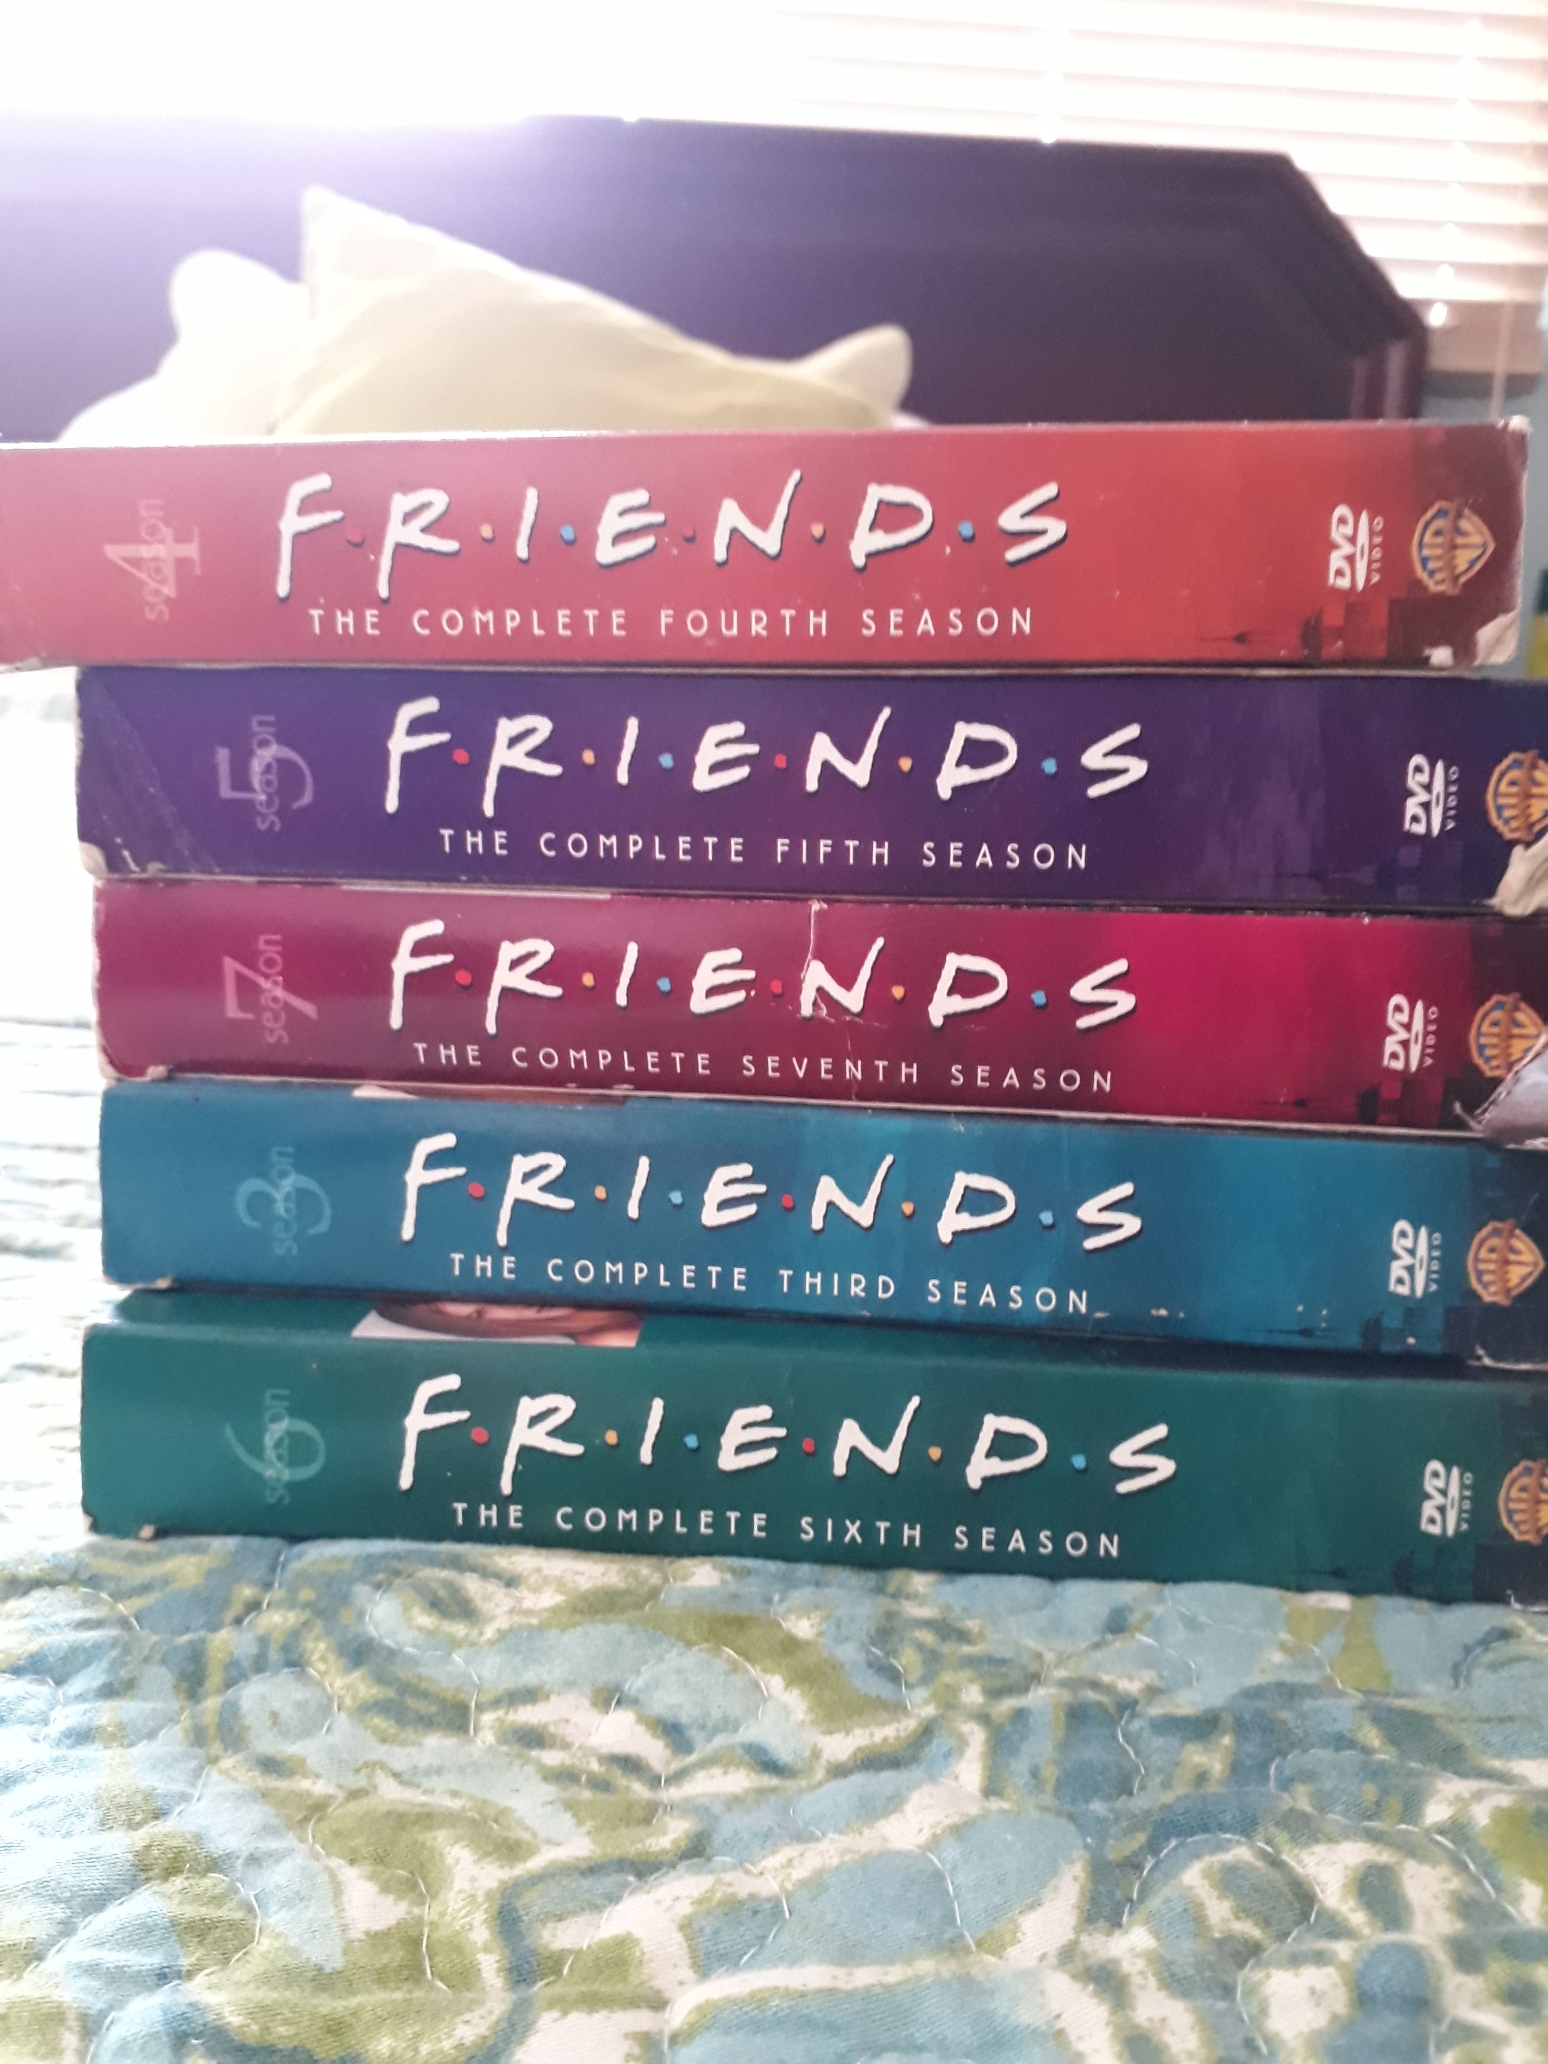 dvds, bluerays y peliculas - FRIENDS (DVD Complete seasons)